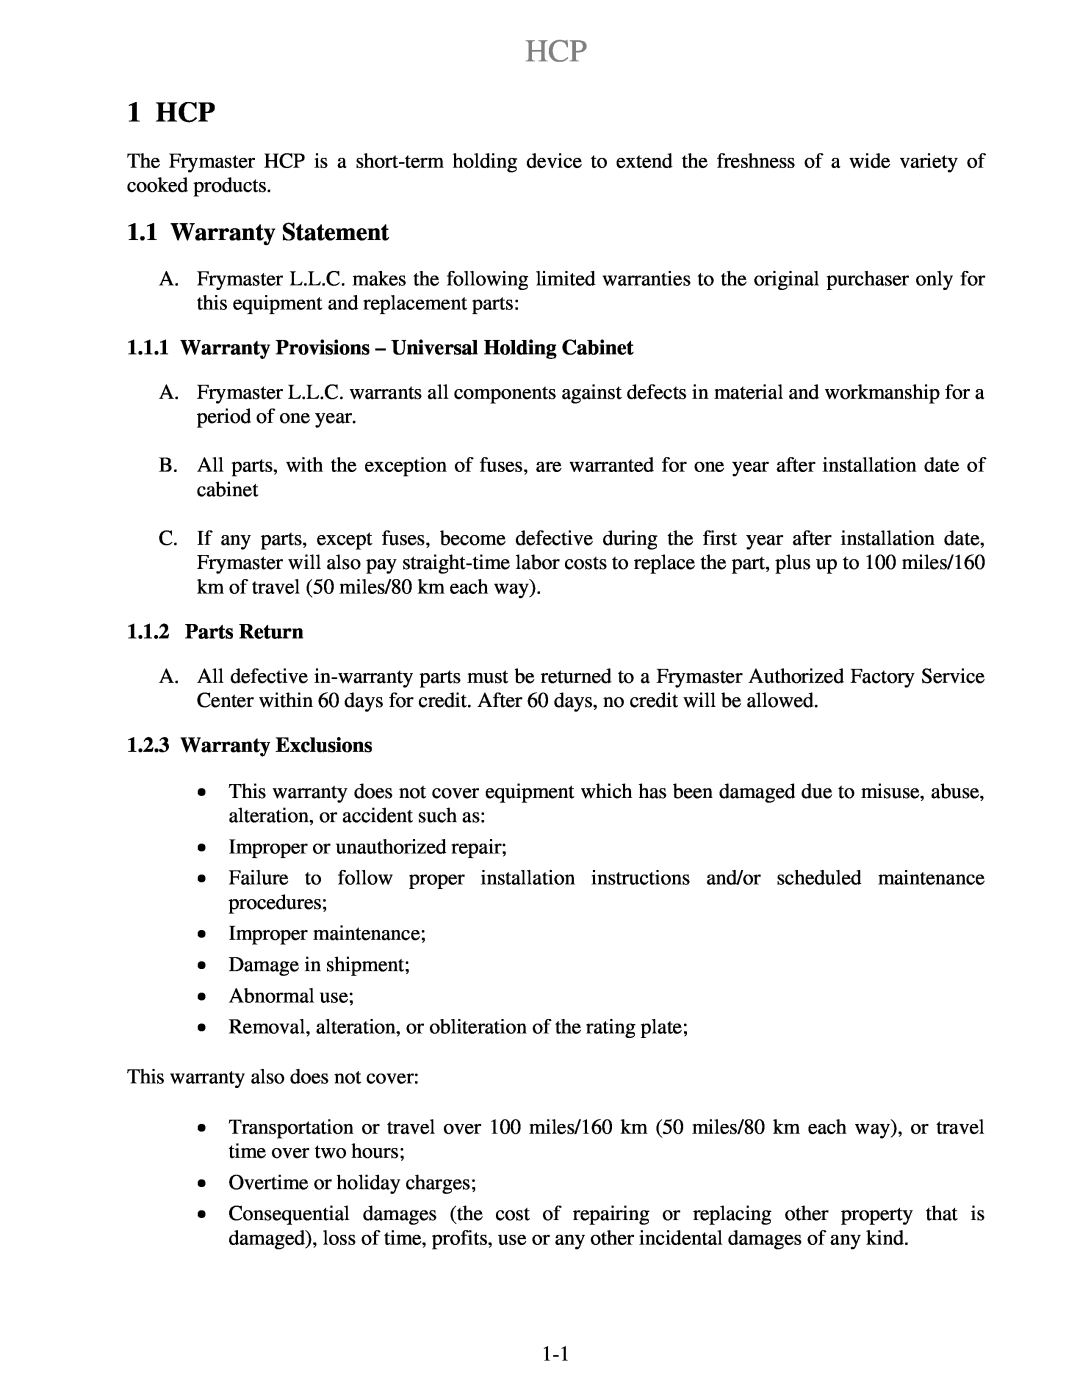 Frymaster operation manual 1 HCP, Warranty Statement 